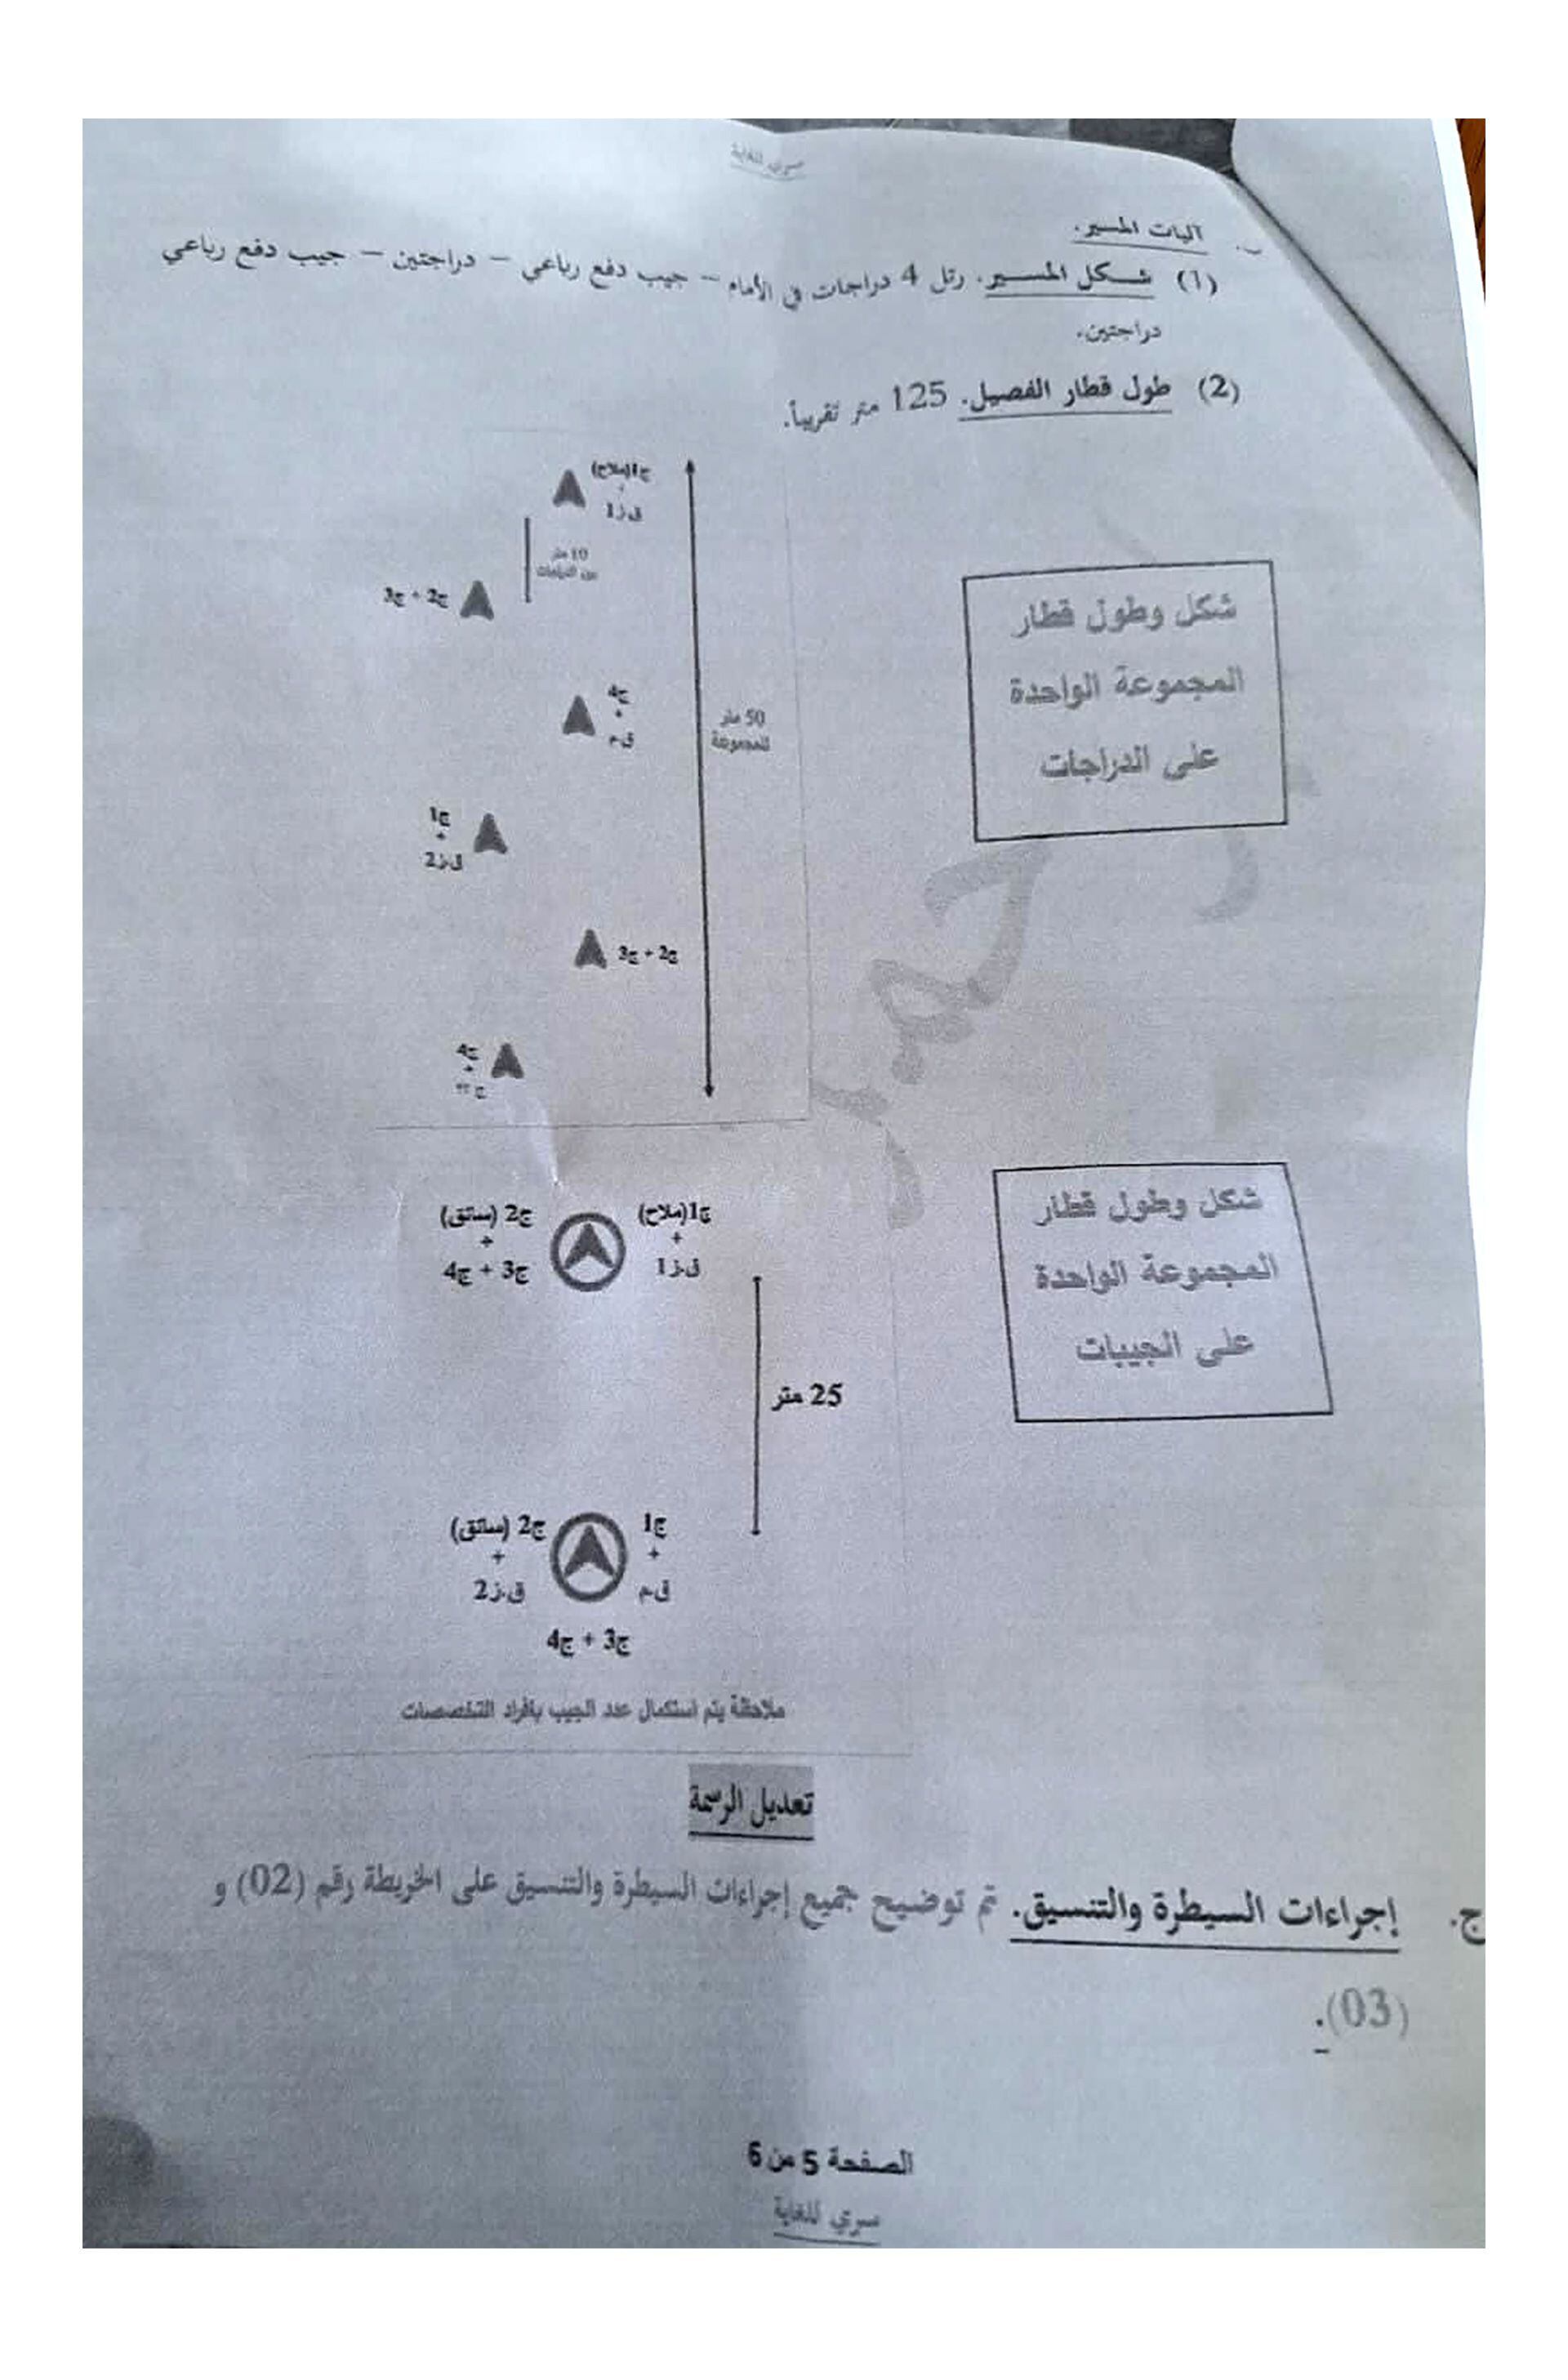 Facsímil del plan terrorista desplegado por Hamas en el kibutz Saad